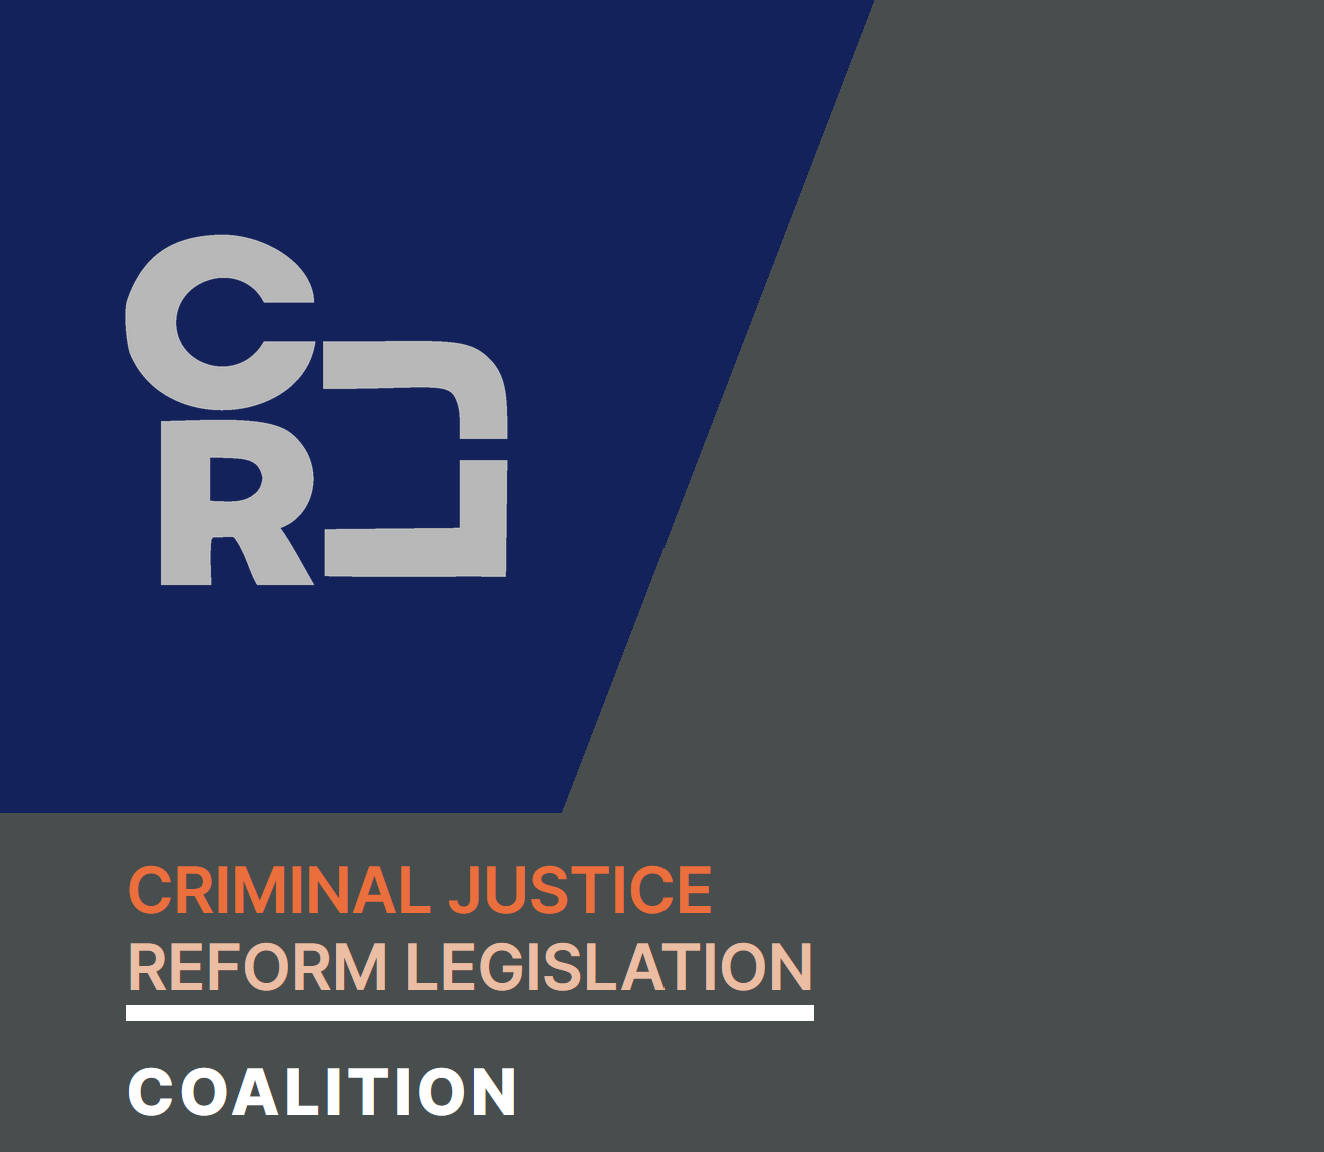 Join the Criminal Justice Reform Legislation Coalition Meeting